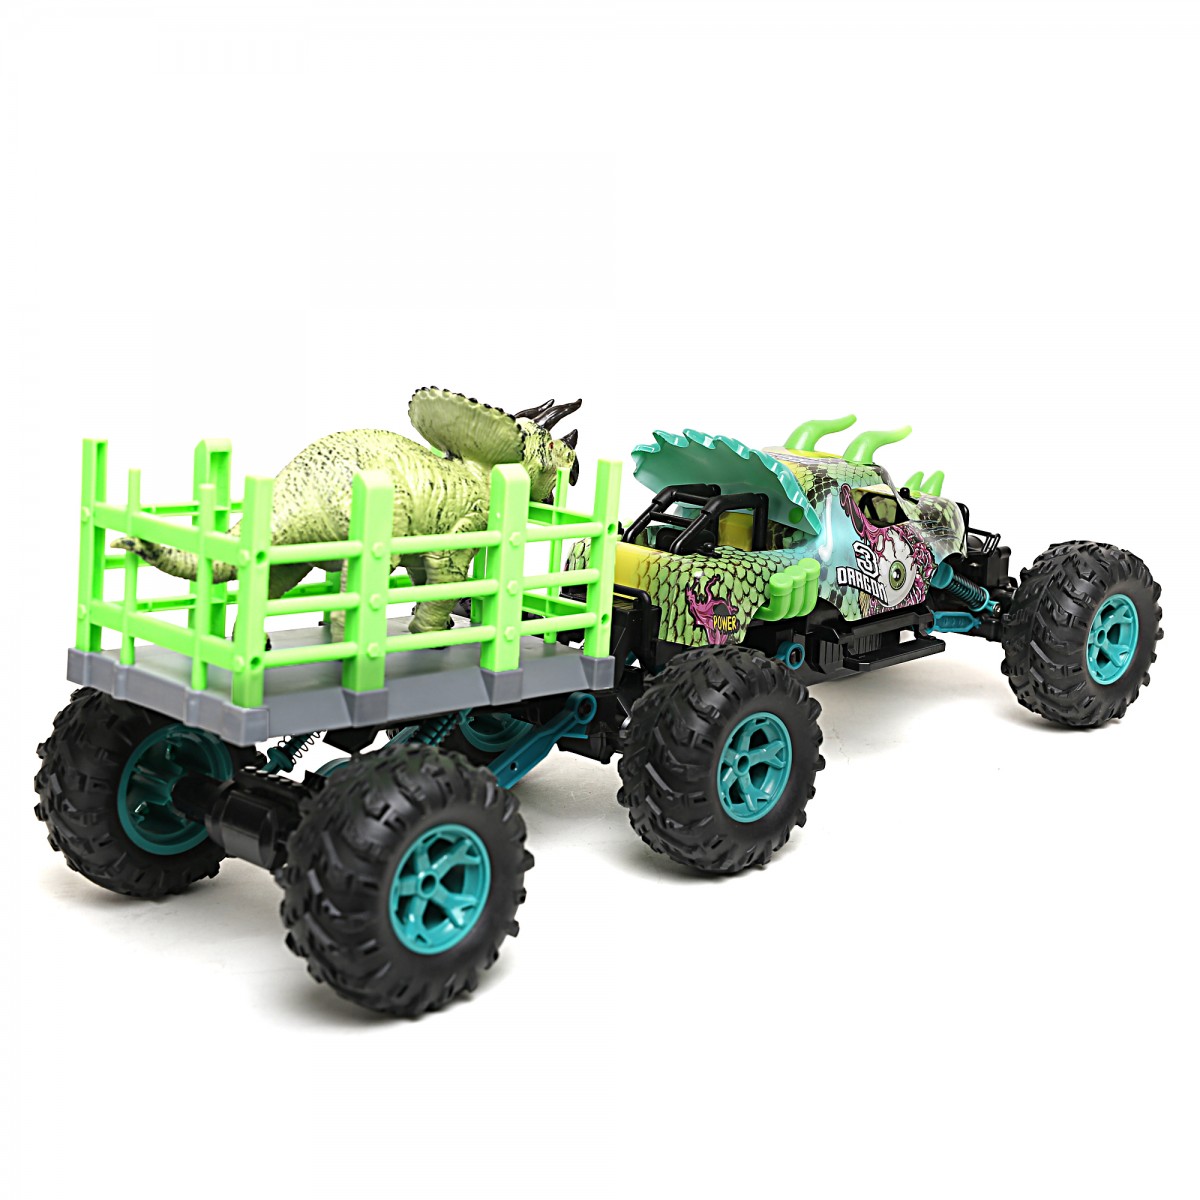 Ralleyz 2.4G 1:14 Dinosaur Truck Green 8Y+